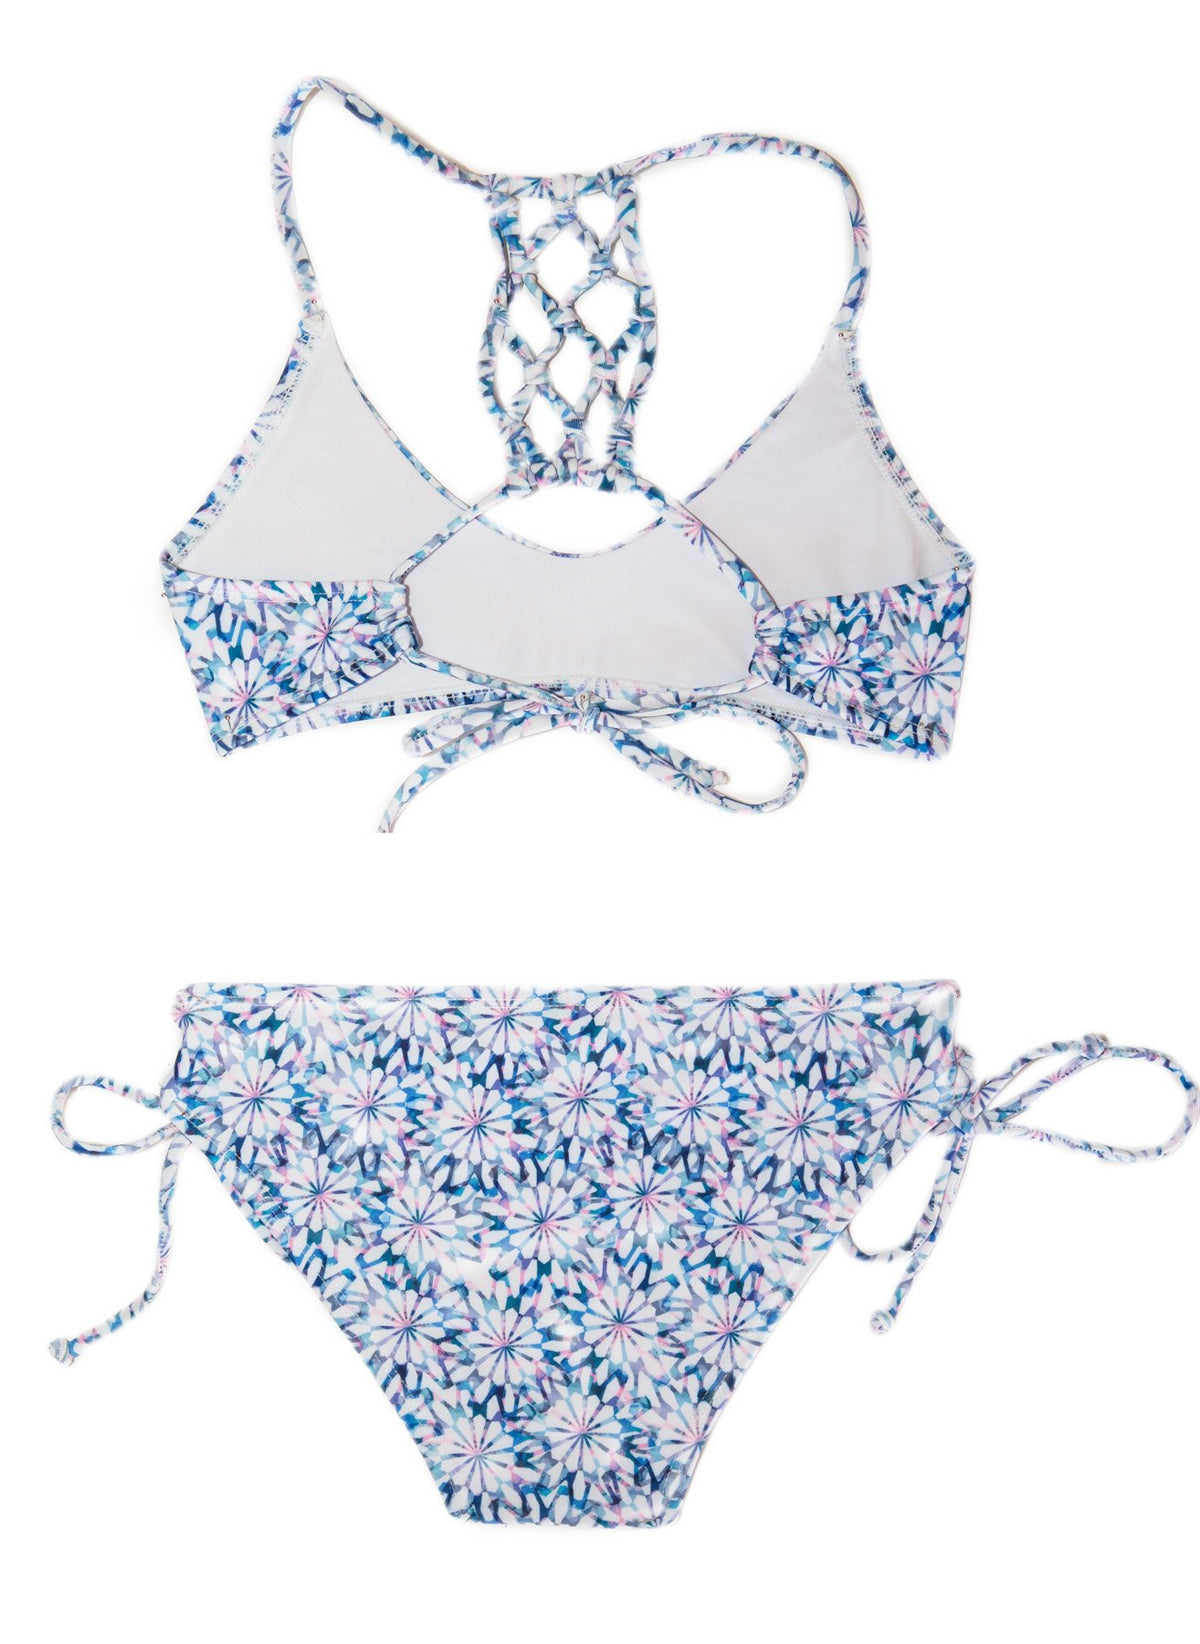 DAISY BLUE - 2 PIECE FLORAL Youth Girls Bikini Swimsuit SET by Chance ...